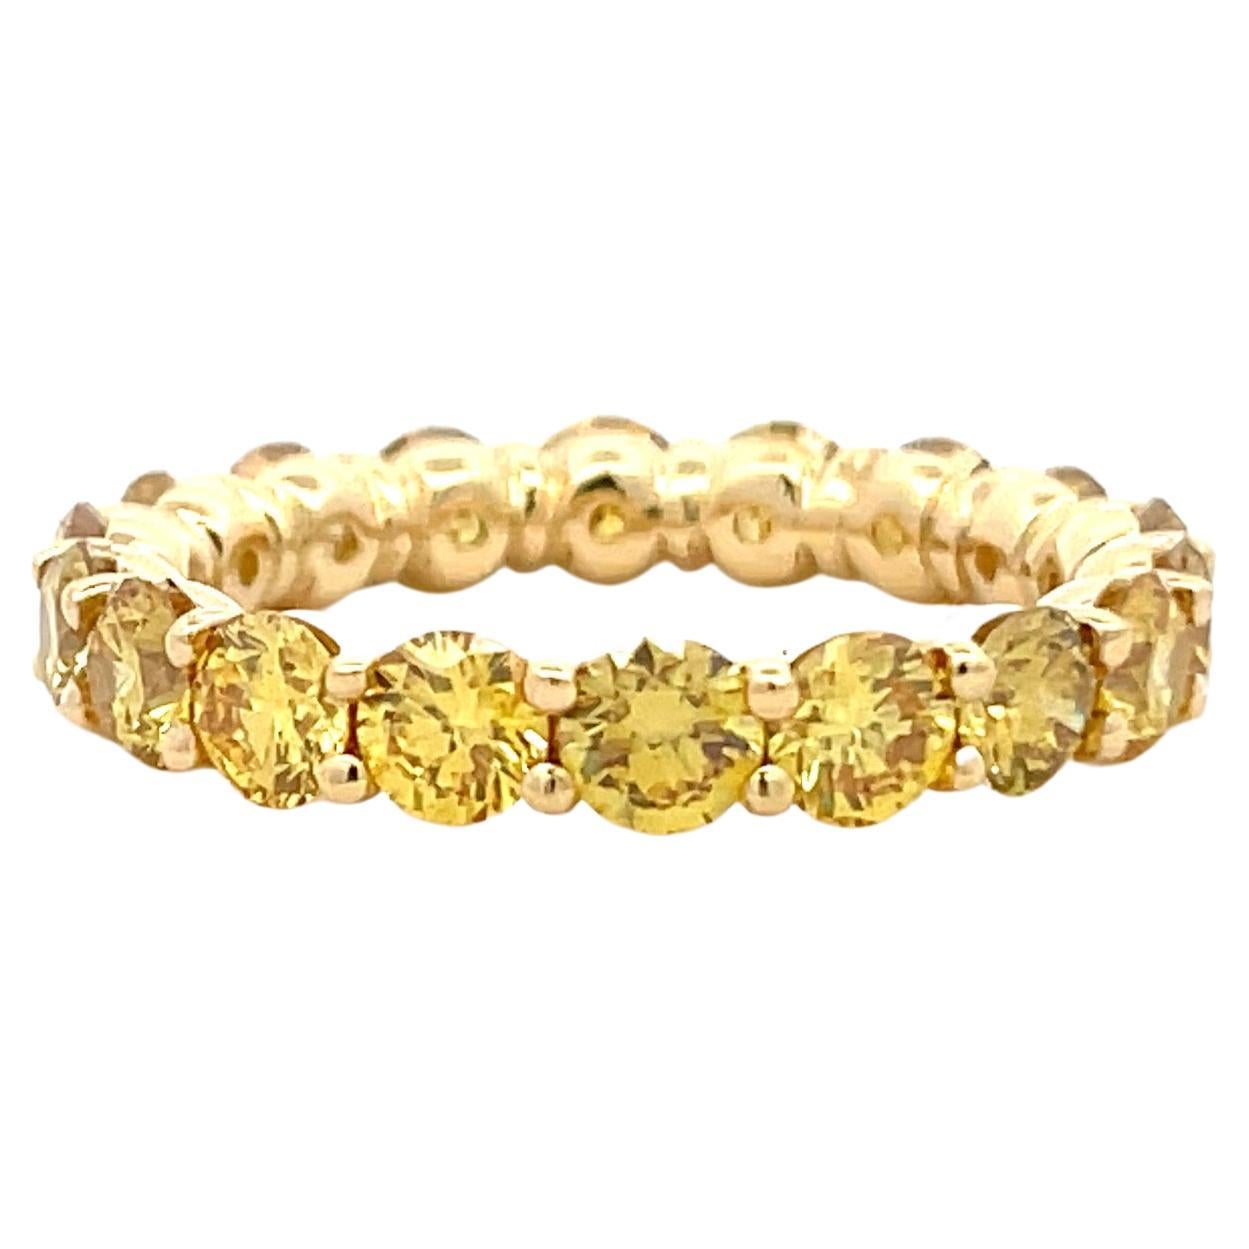 18 Karat Yellow gold eternity wedding ring featuring 18 Fancy Vivid Yellow diamonds weighing 3.45 Carats.
Average Diamond 0.19 Carats
Beautiful & Sparkles Unbelievable! 